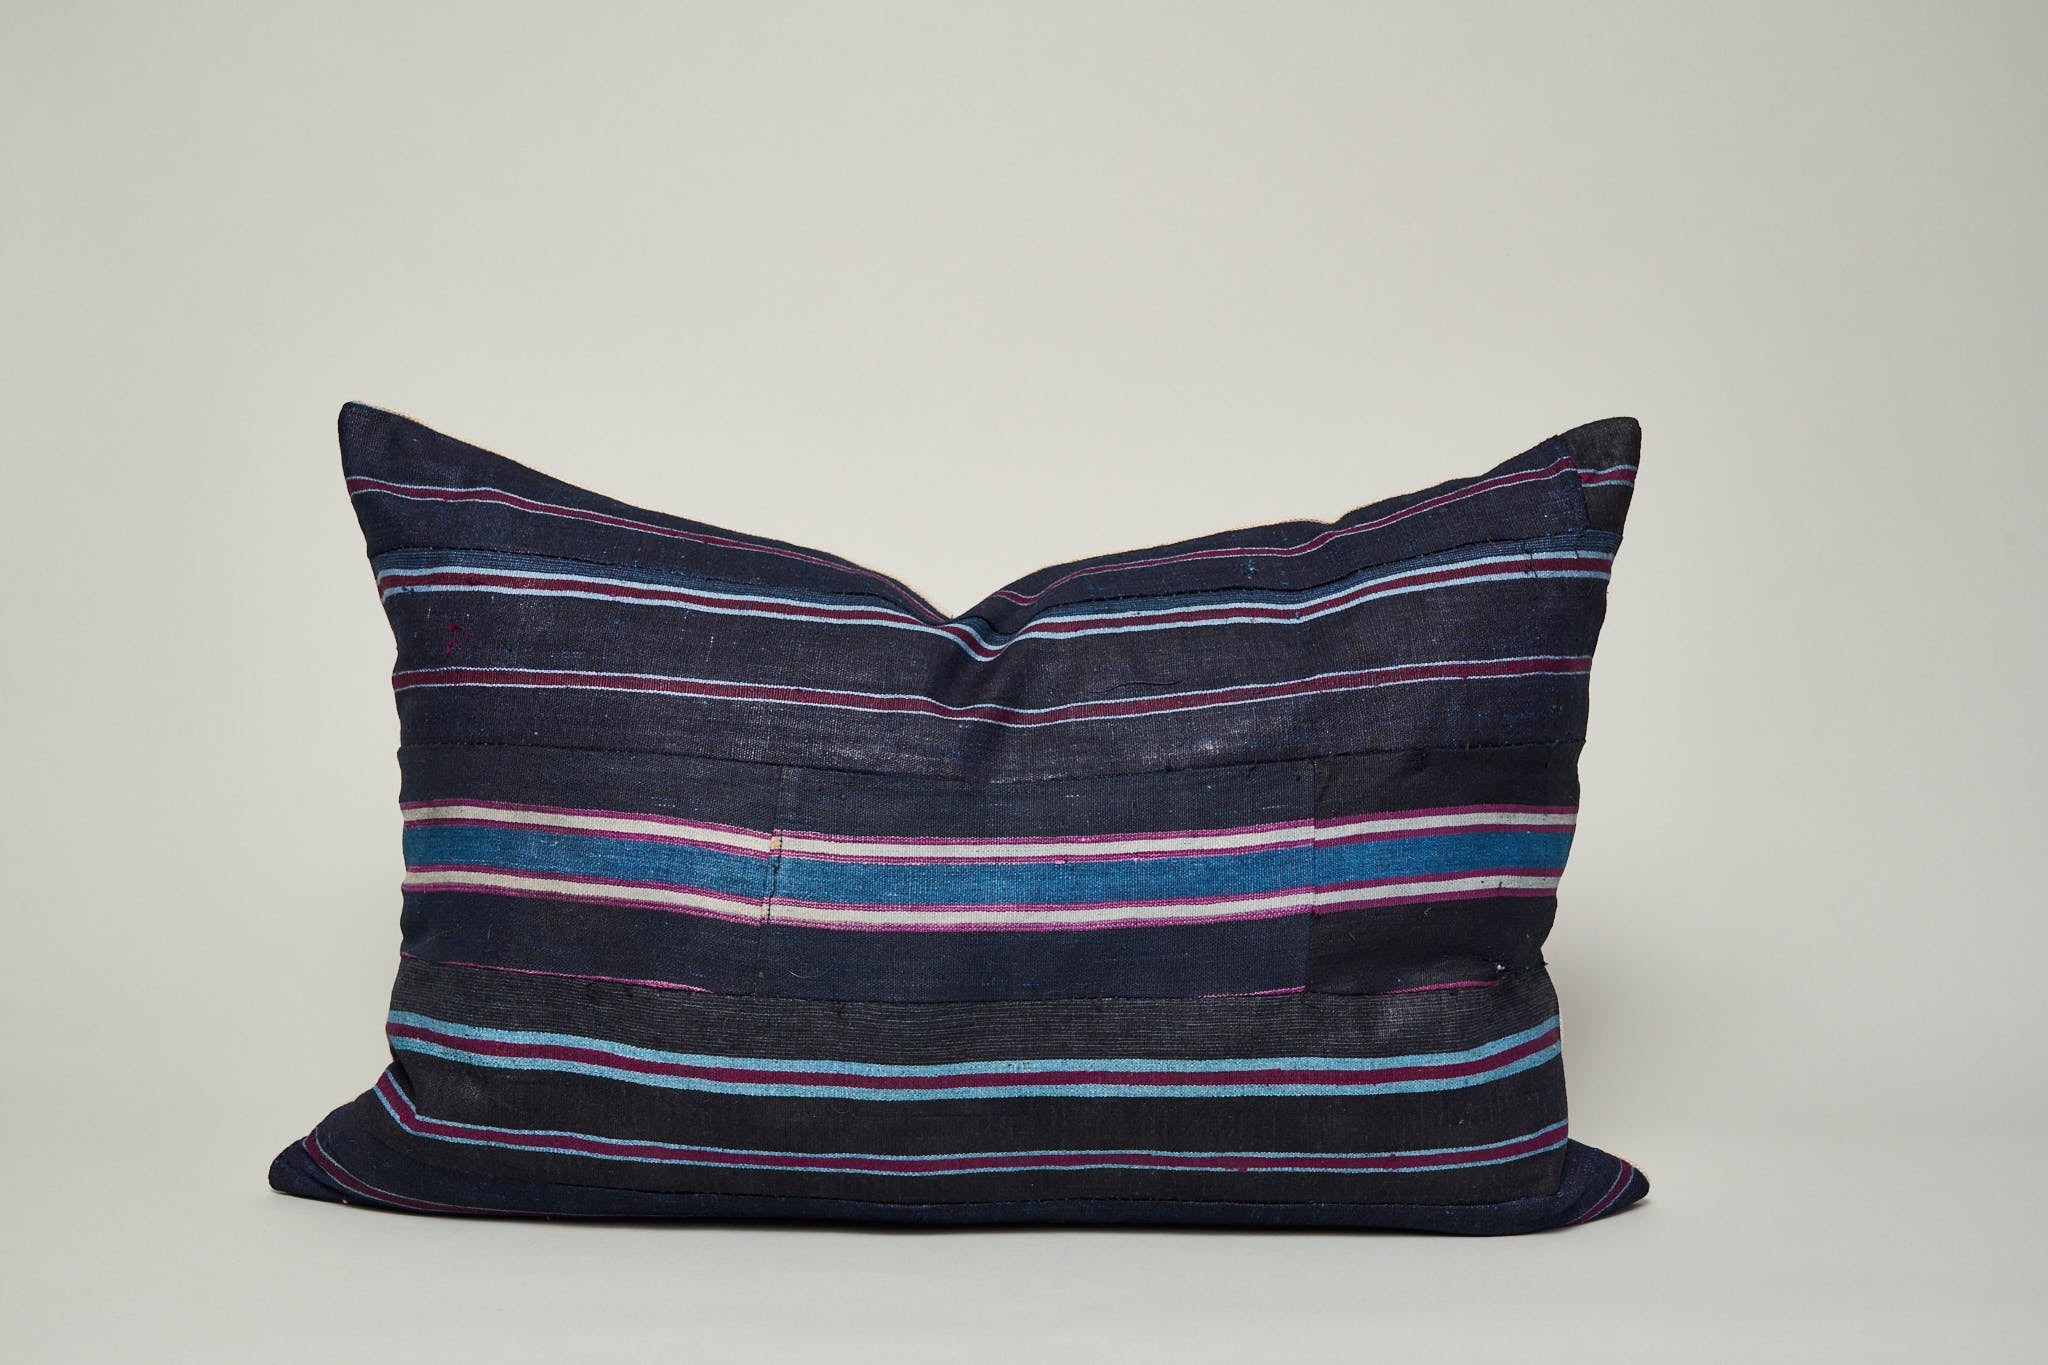 Vintage African Textile Pillow